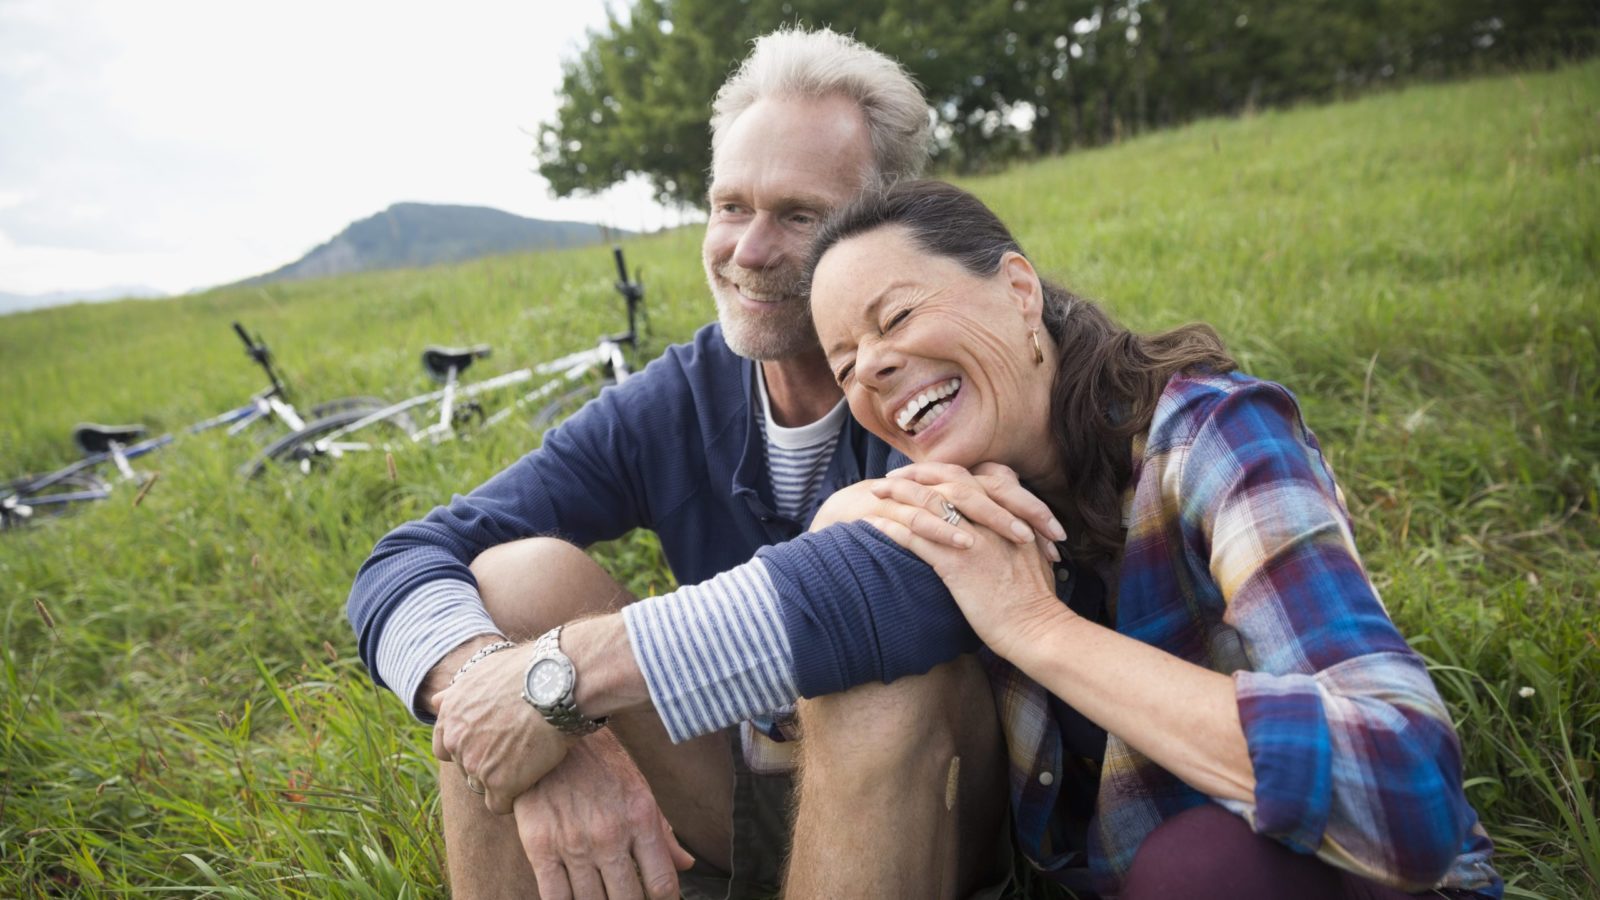 Laughing senior couple relaxing near mountain bikes in remote rural field (Photo: Trafalgar Tours)